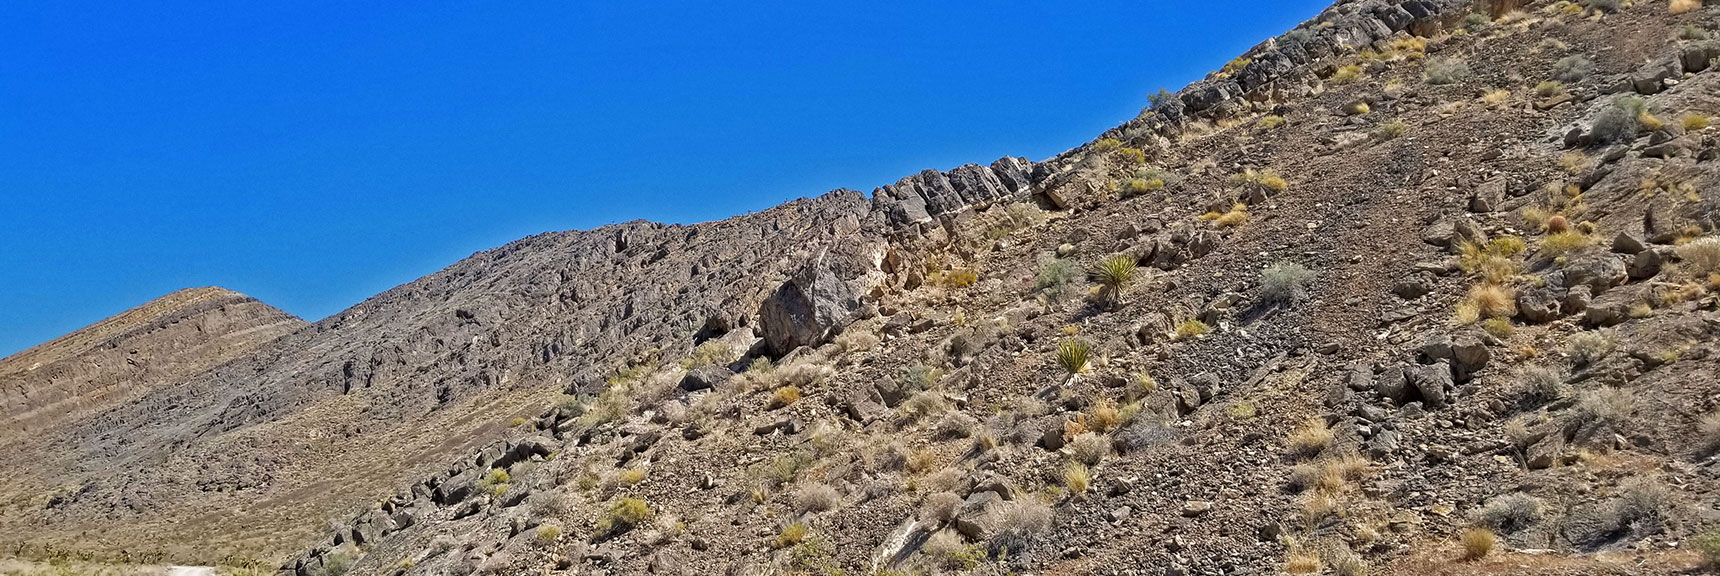 Western Section of Fossil Ridge. Dark Rock 250-500 Million Years Old | Fossil Ridge End to End | Sheep Range | Desert National Wildlife Refuge, Nevada